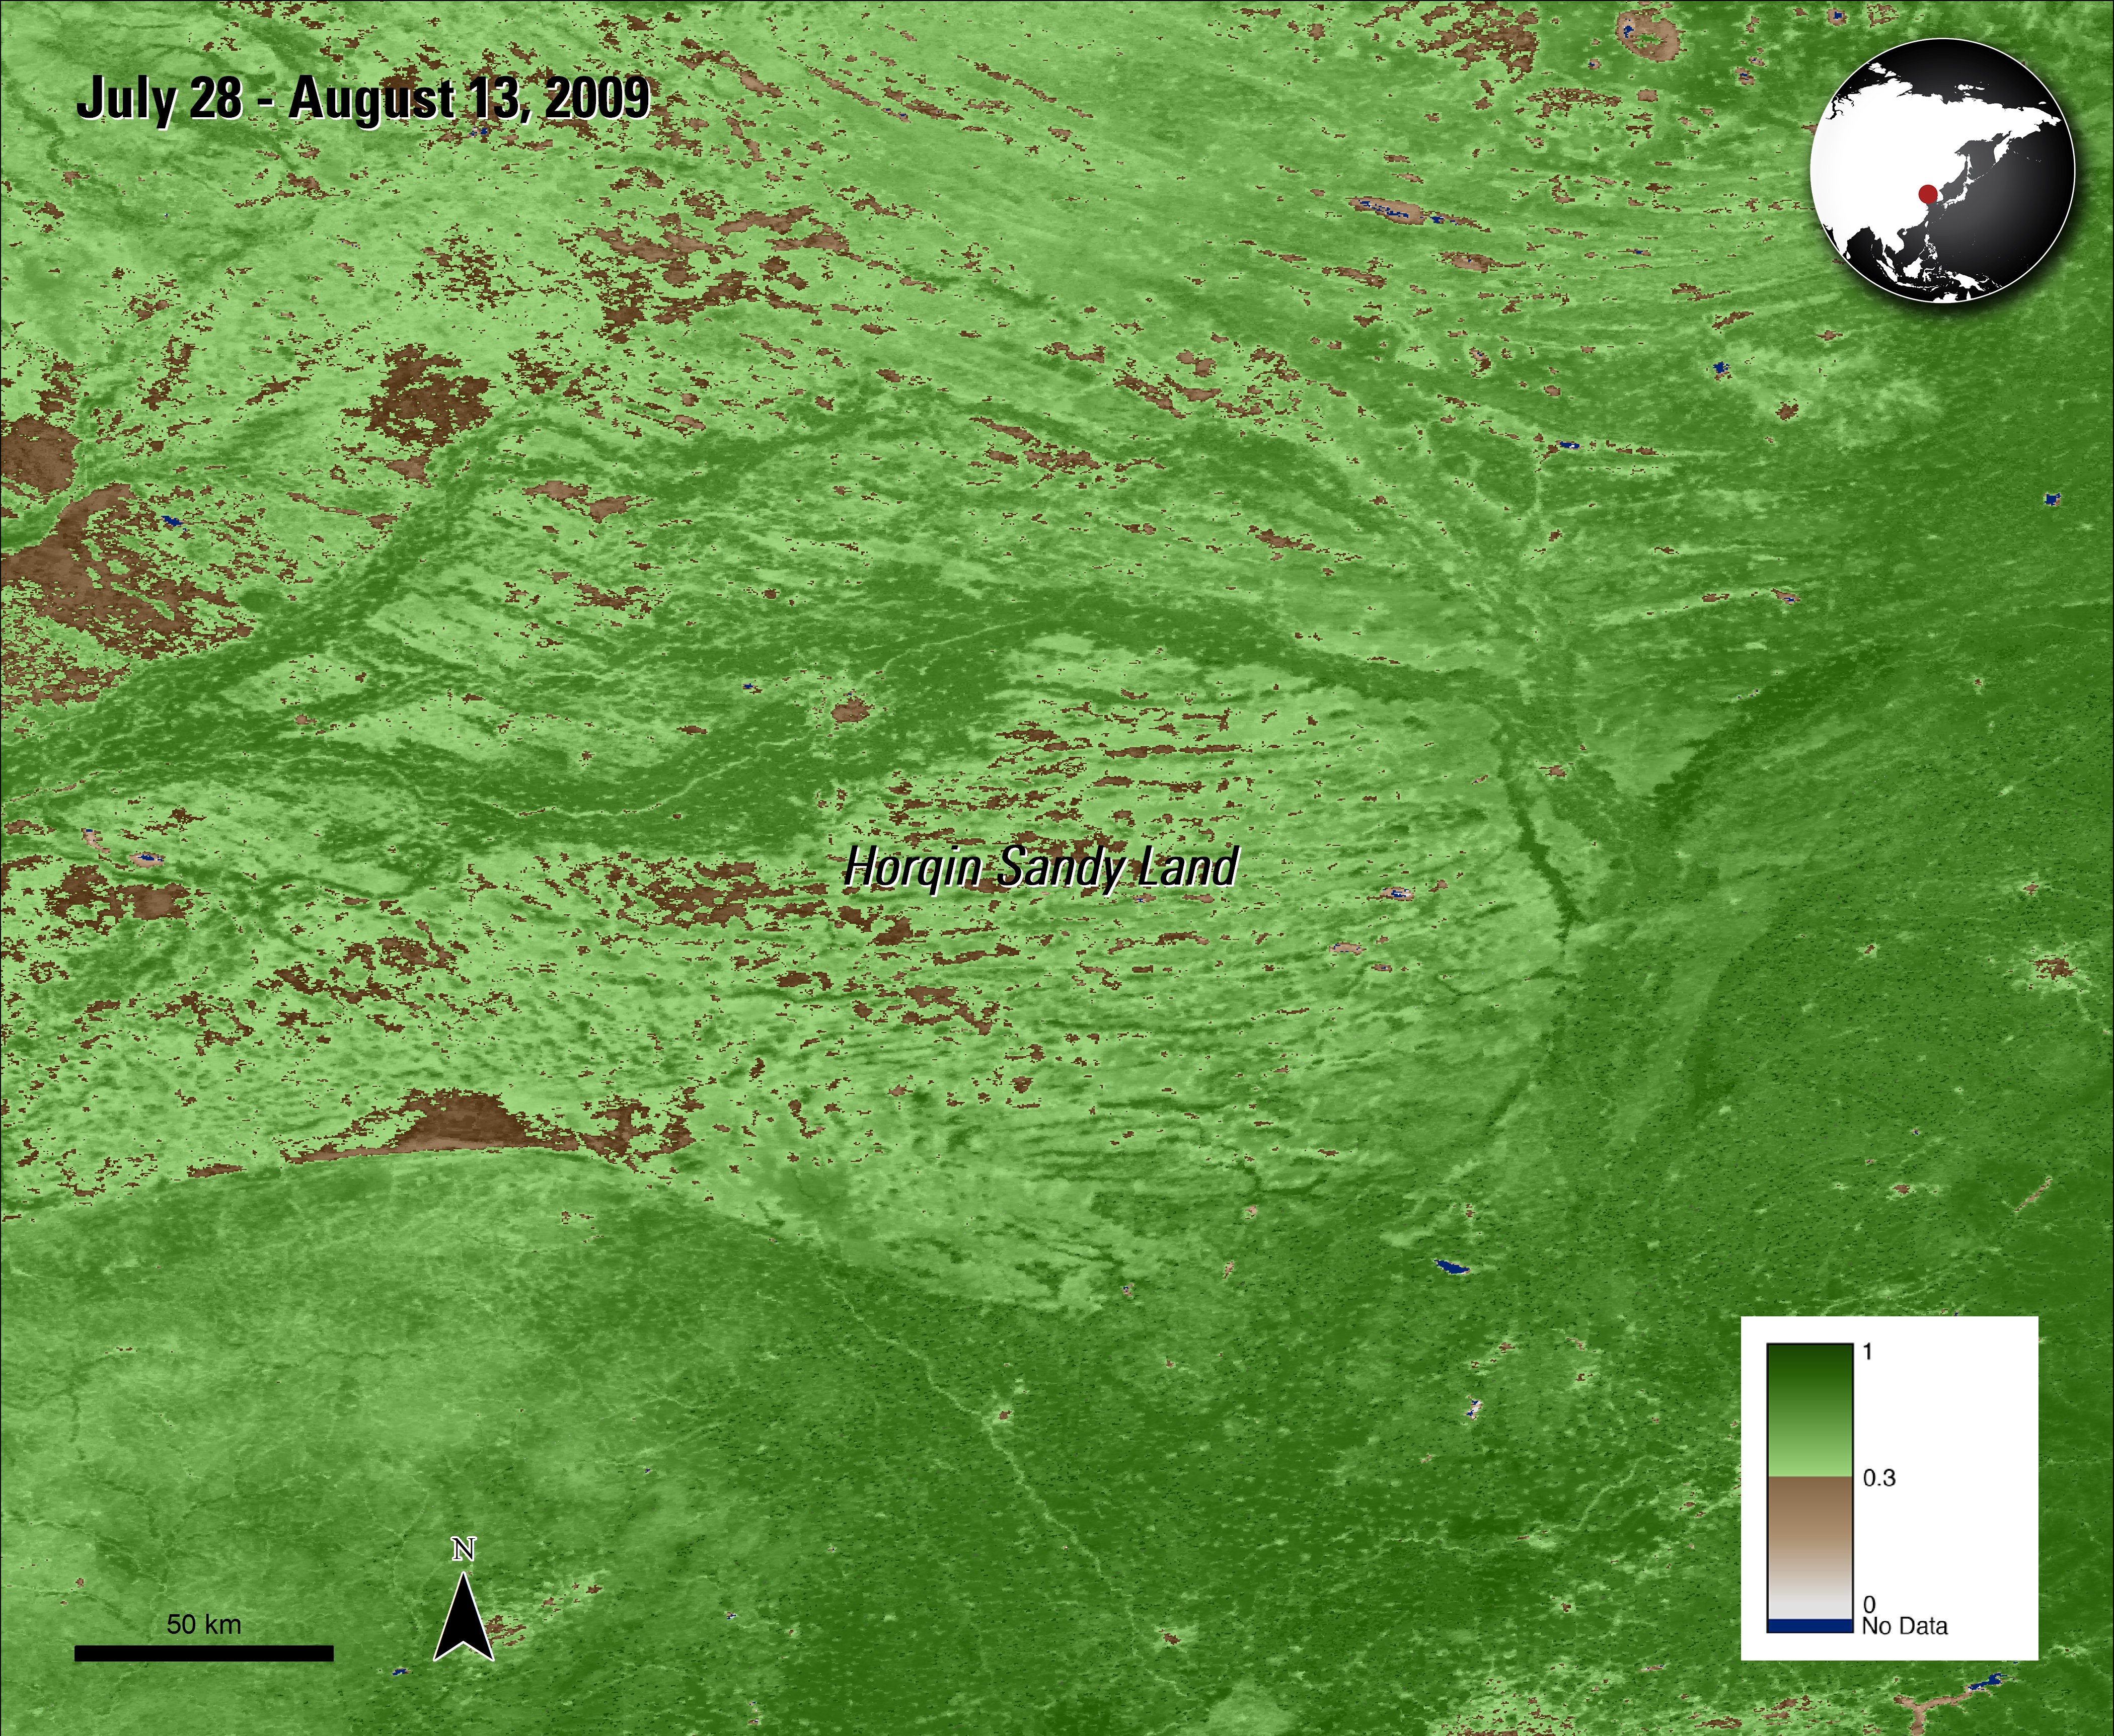 MOD13Q1 NDVI  data over Horqin Sandy Land, China.